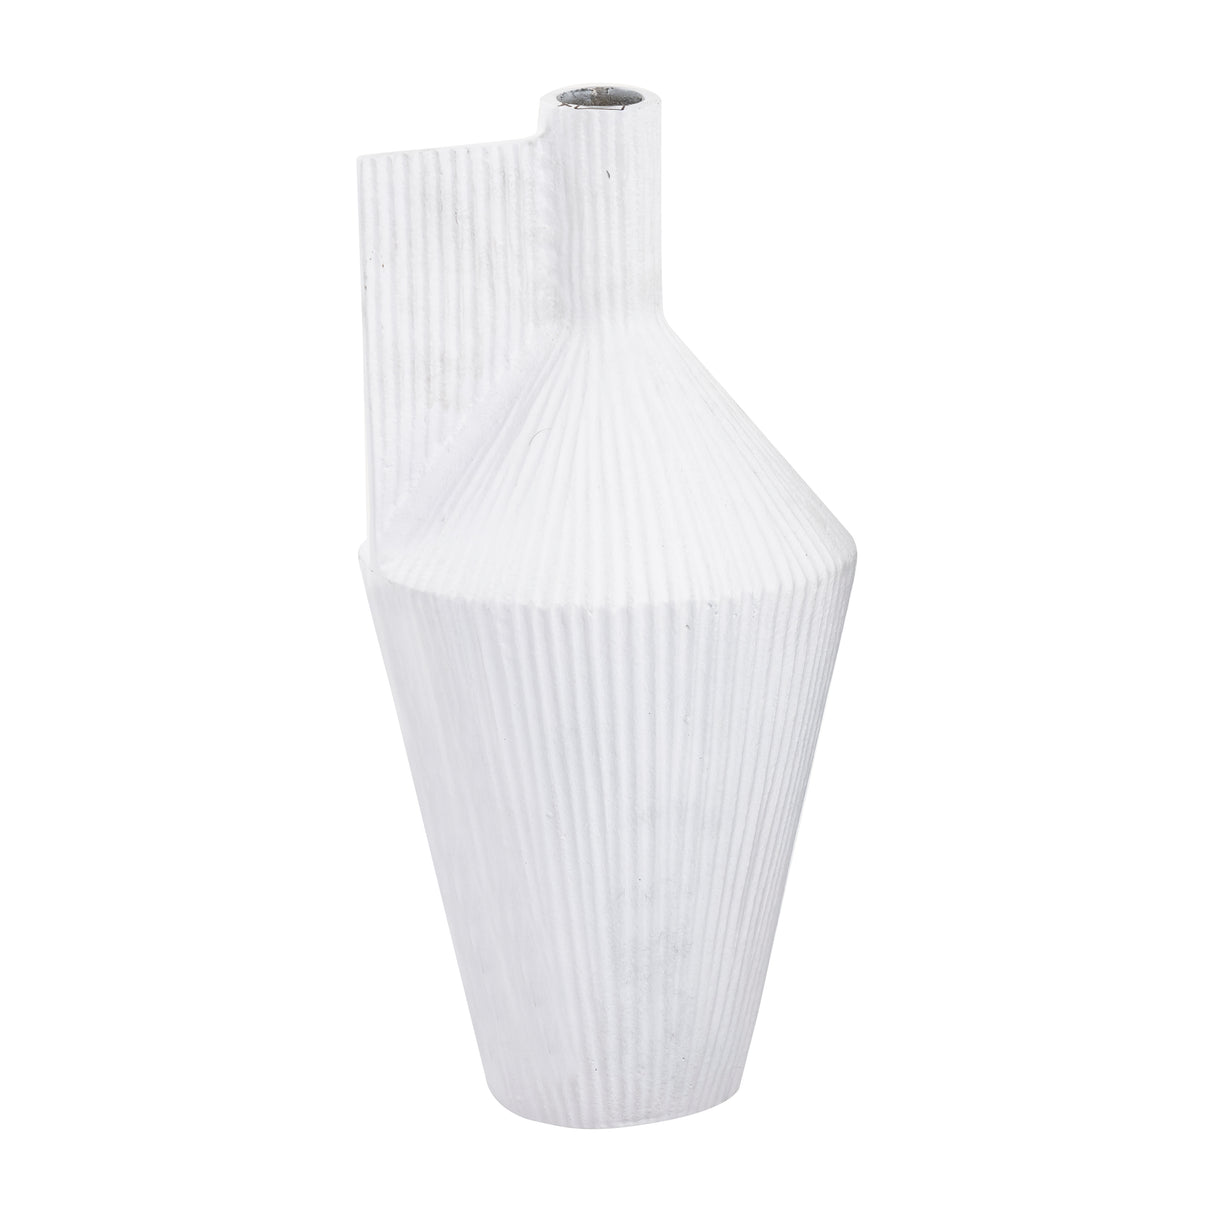 Elk H0807-9221 Rabel Vase - White